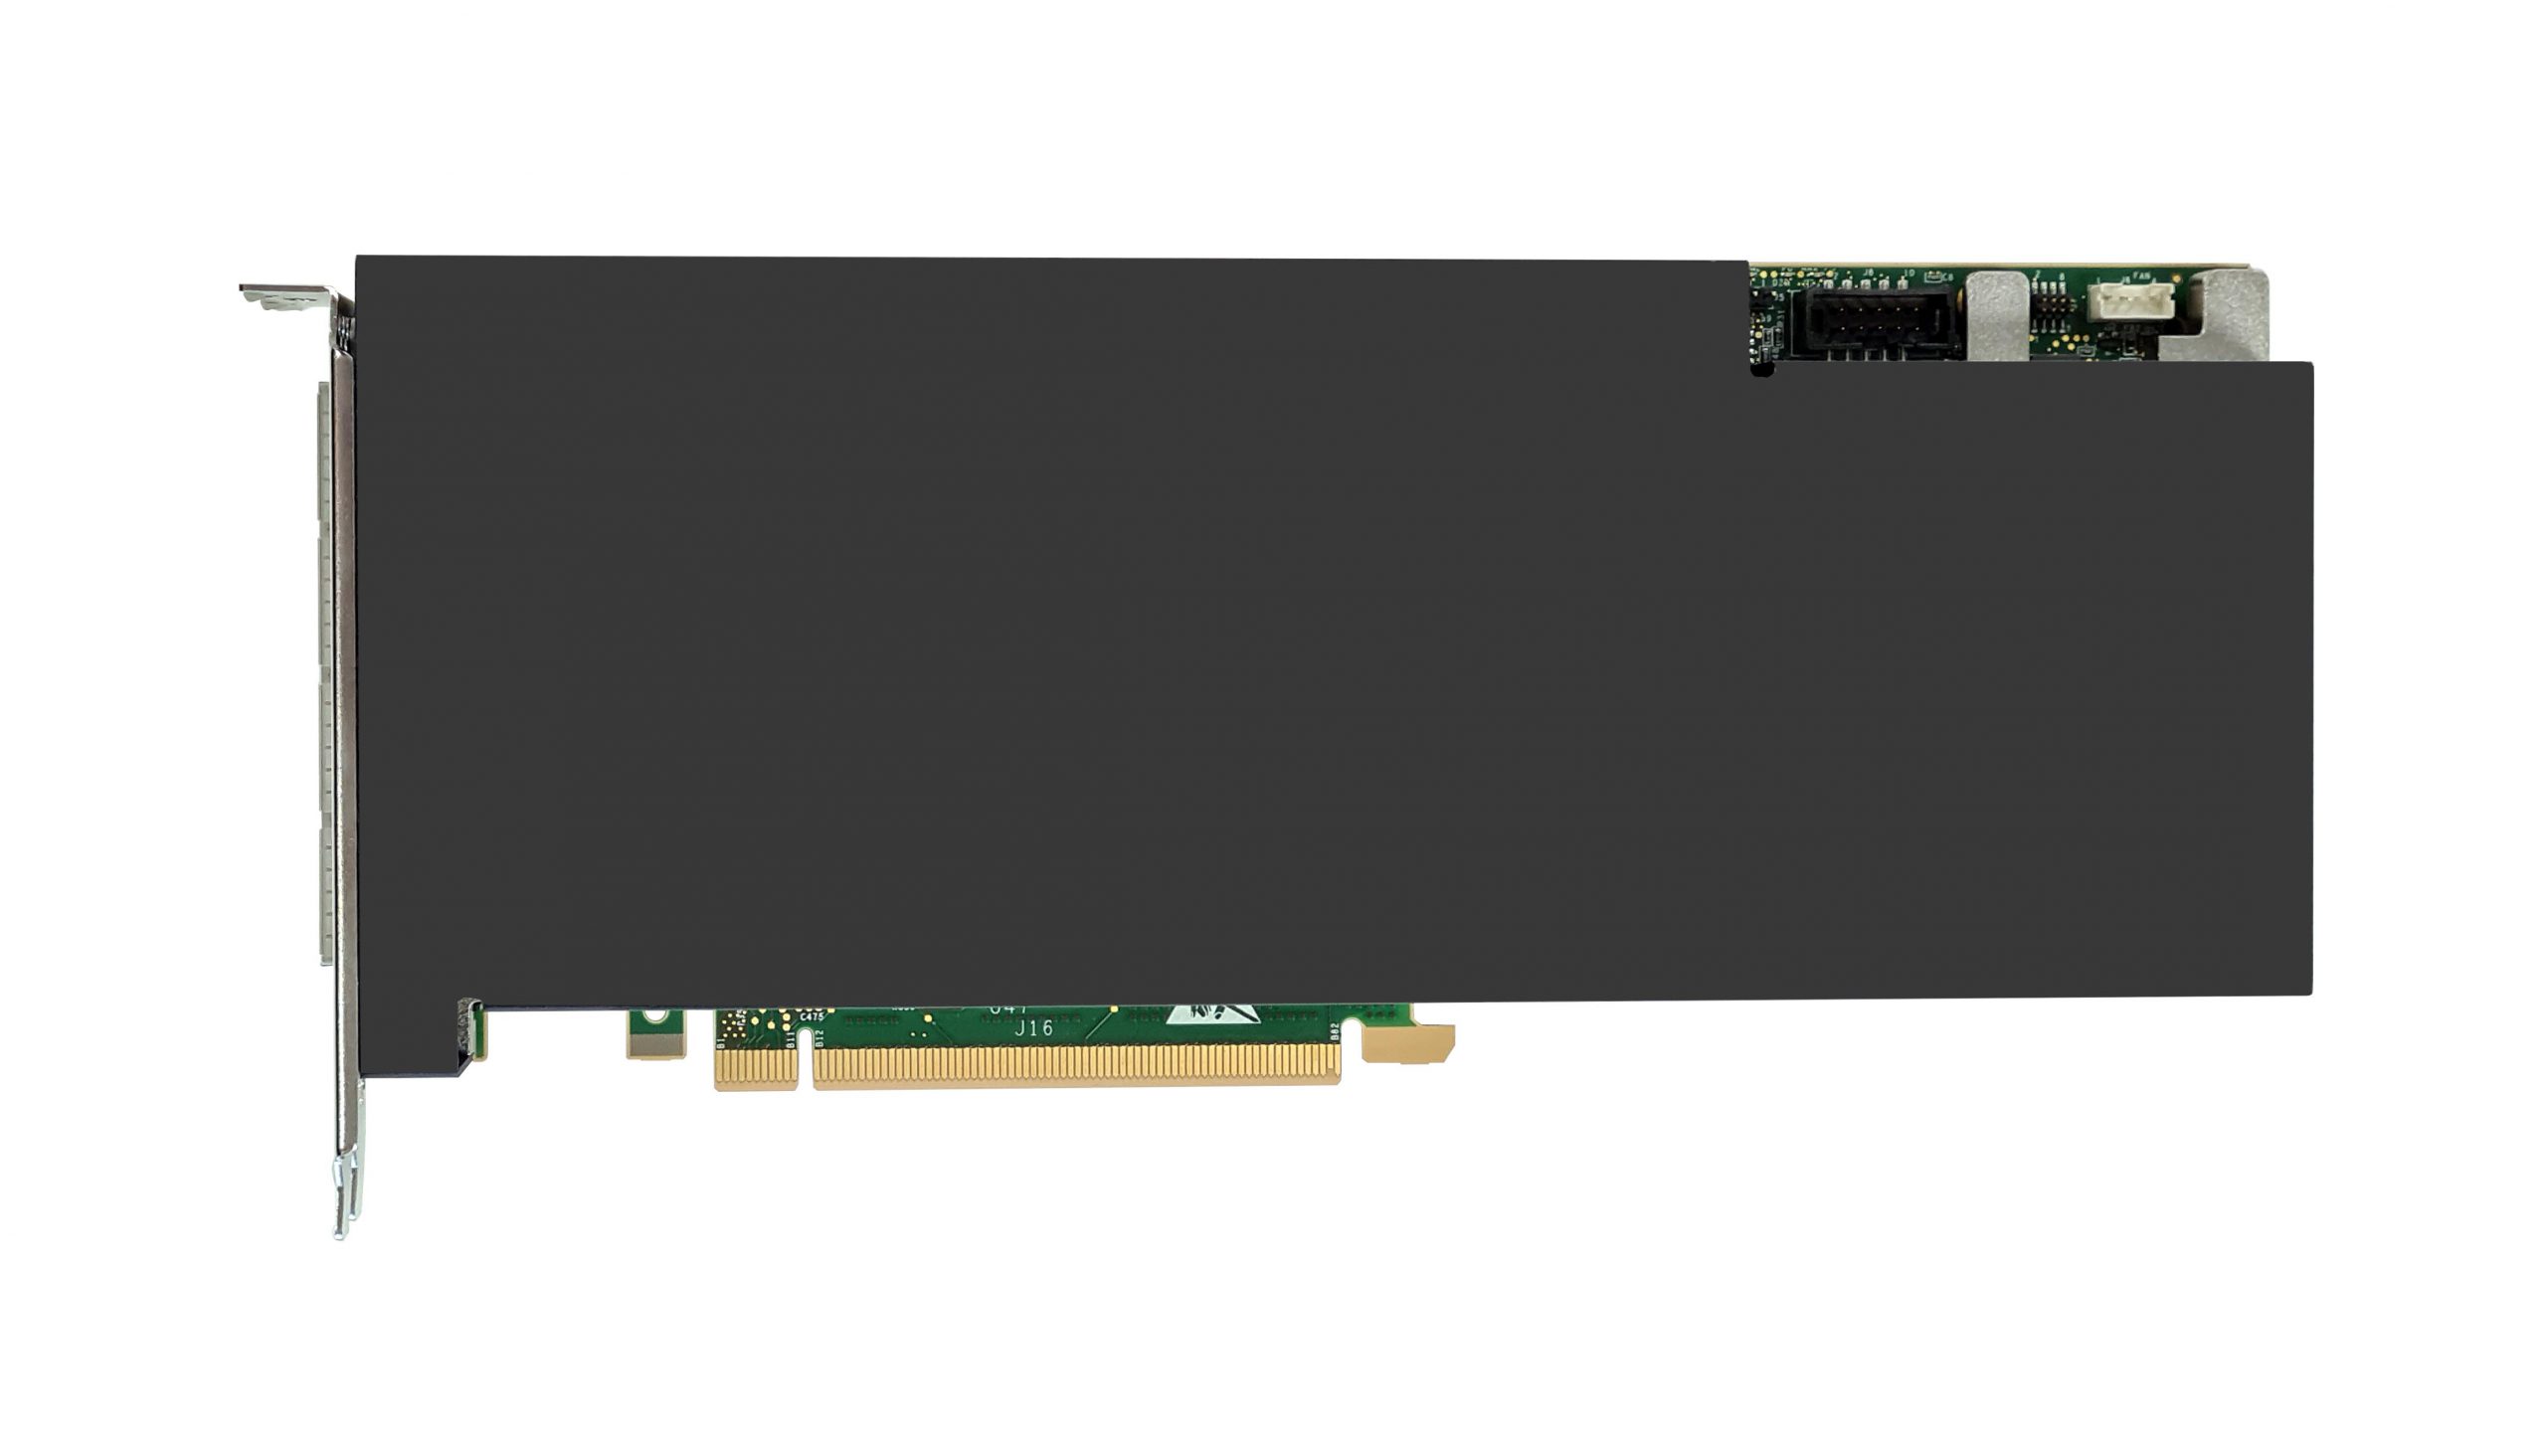 N5013 N5014 FPGA SmartNIC Intel Stratix based